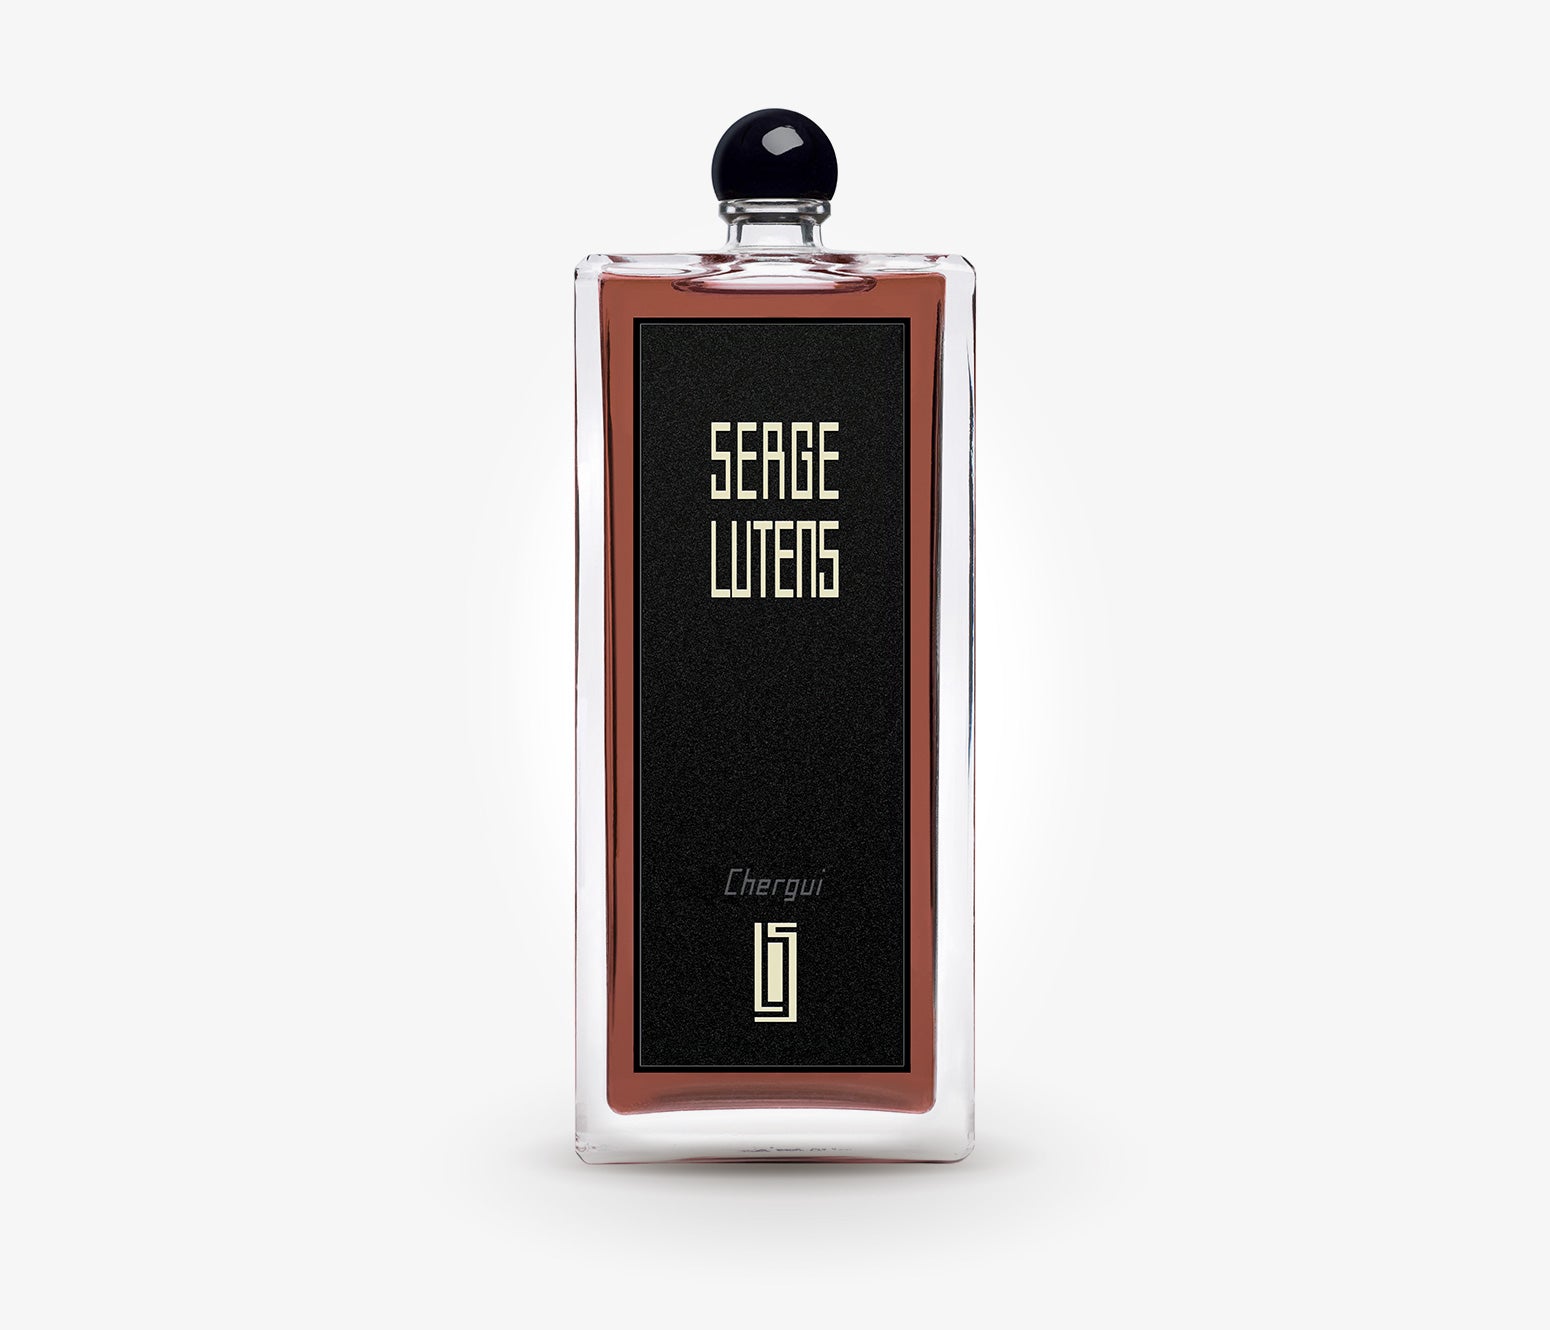 Serge Lutens - Chergui - 100ml - NPA001 - product image - Fragrance - Les Senteurs